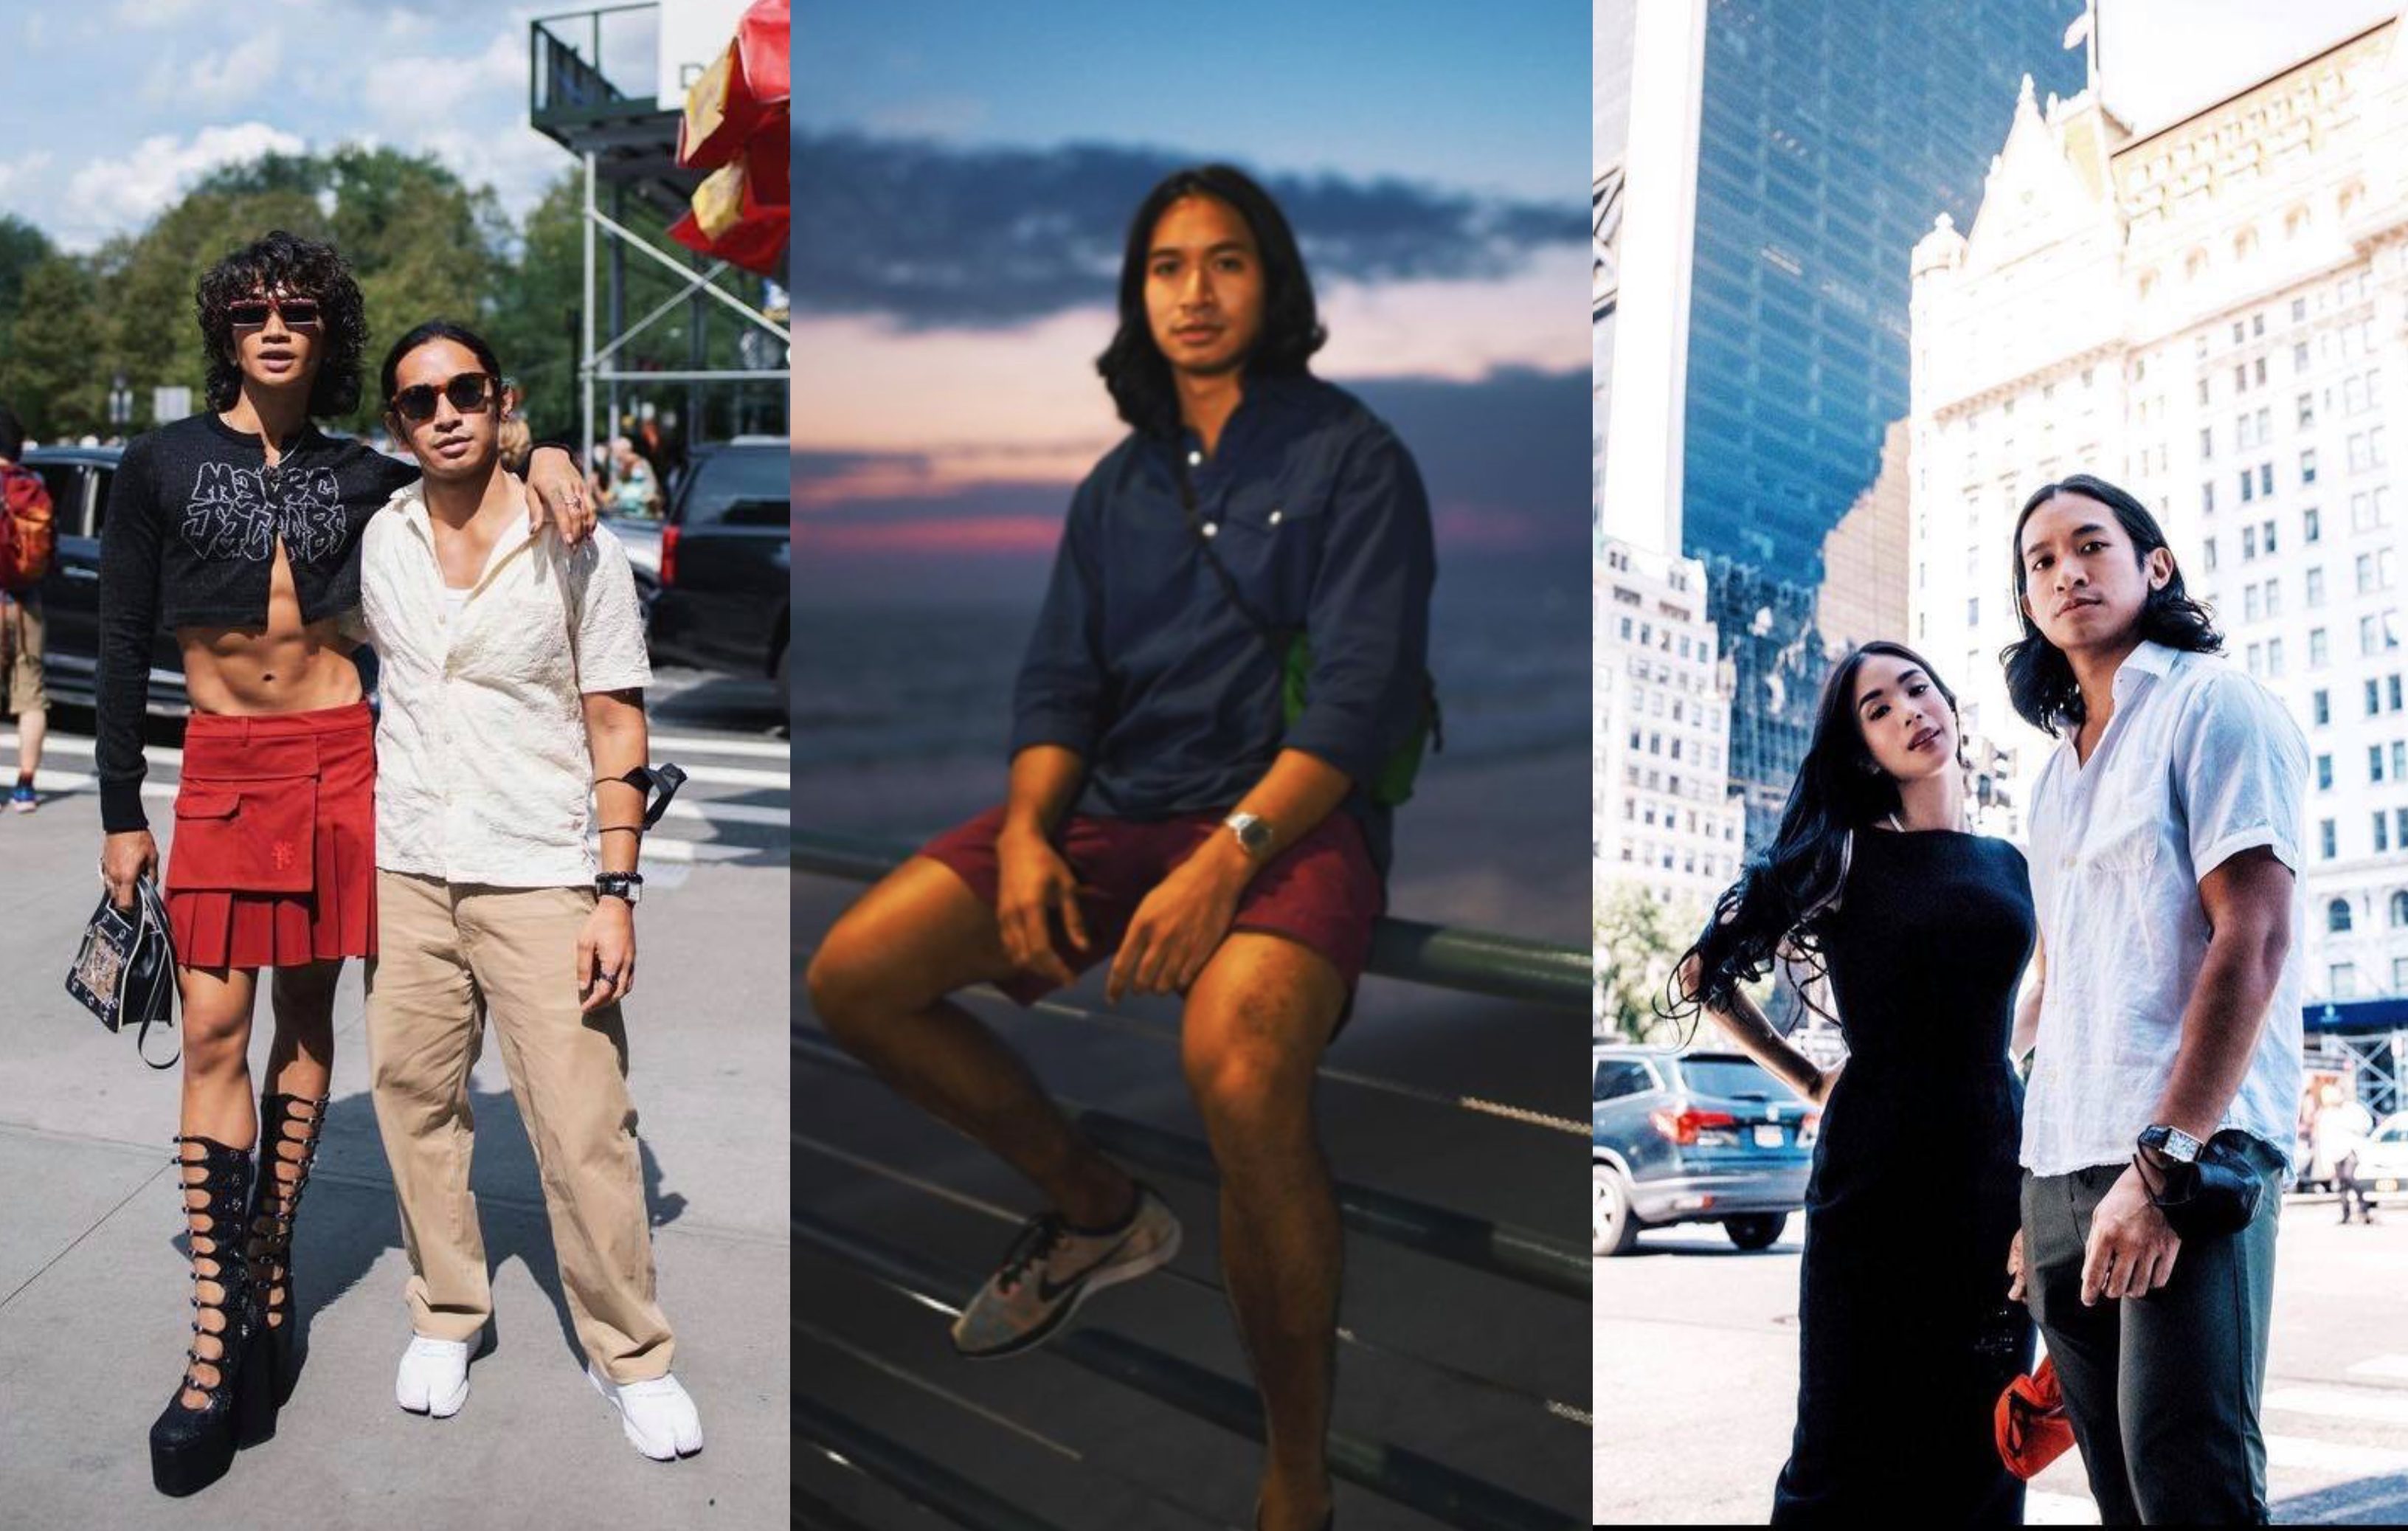 From Manila to Manhattan: Martin Romero on shooting celebs, street style in New York